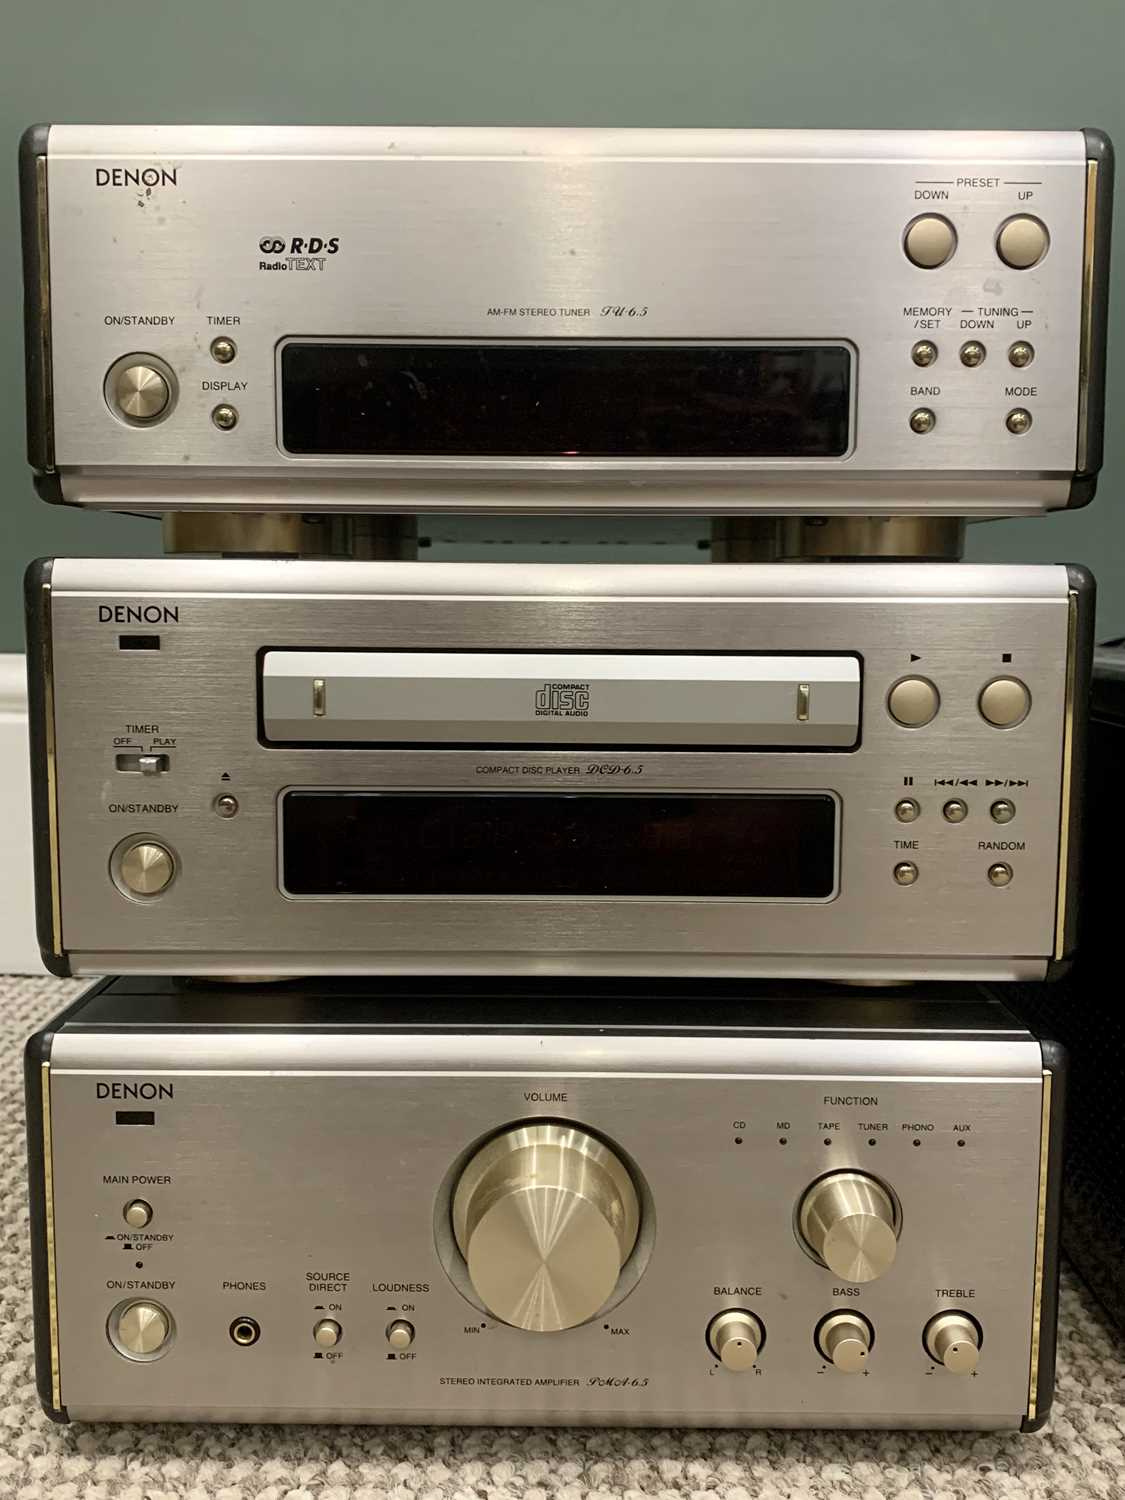 HI-FI EQUIPMENT including Denon hi-fi separates AM-FM tuner TU-6.5, CD player DCD-6.5, amplifier - Image 2 of 4